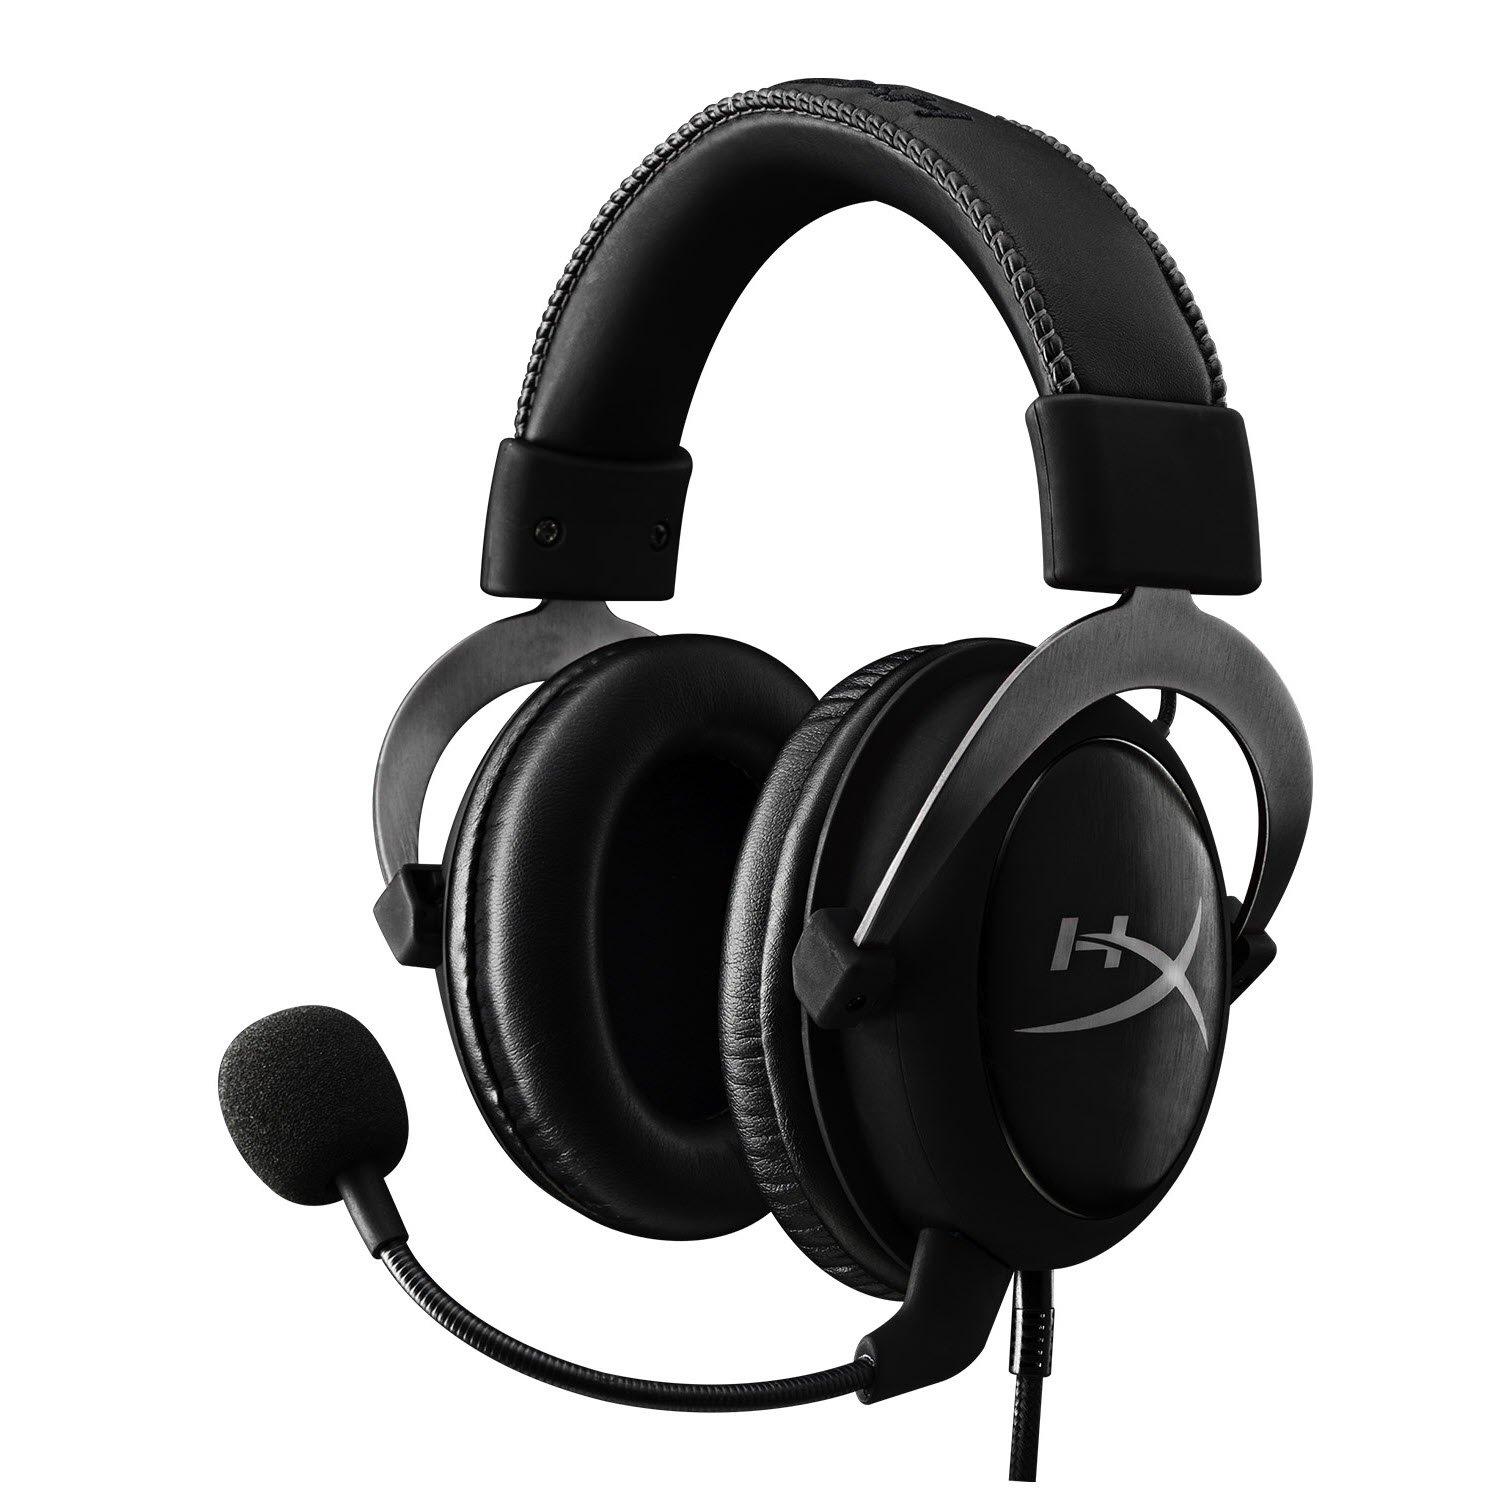 gamestop ps4 platinum headset